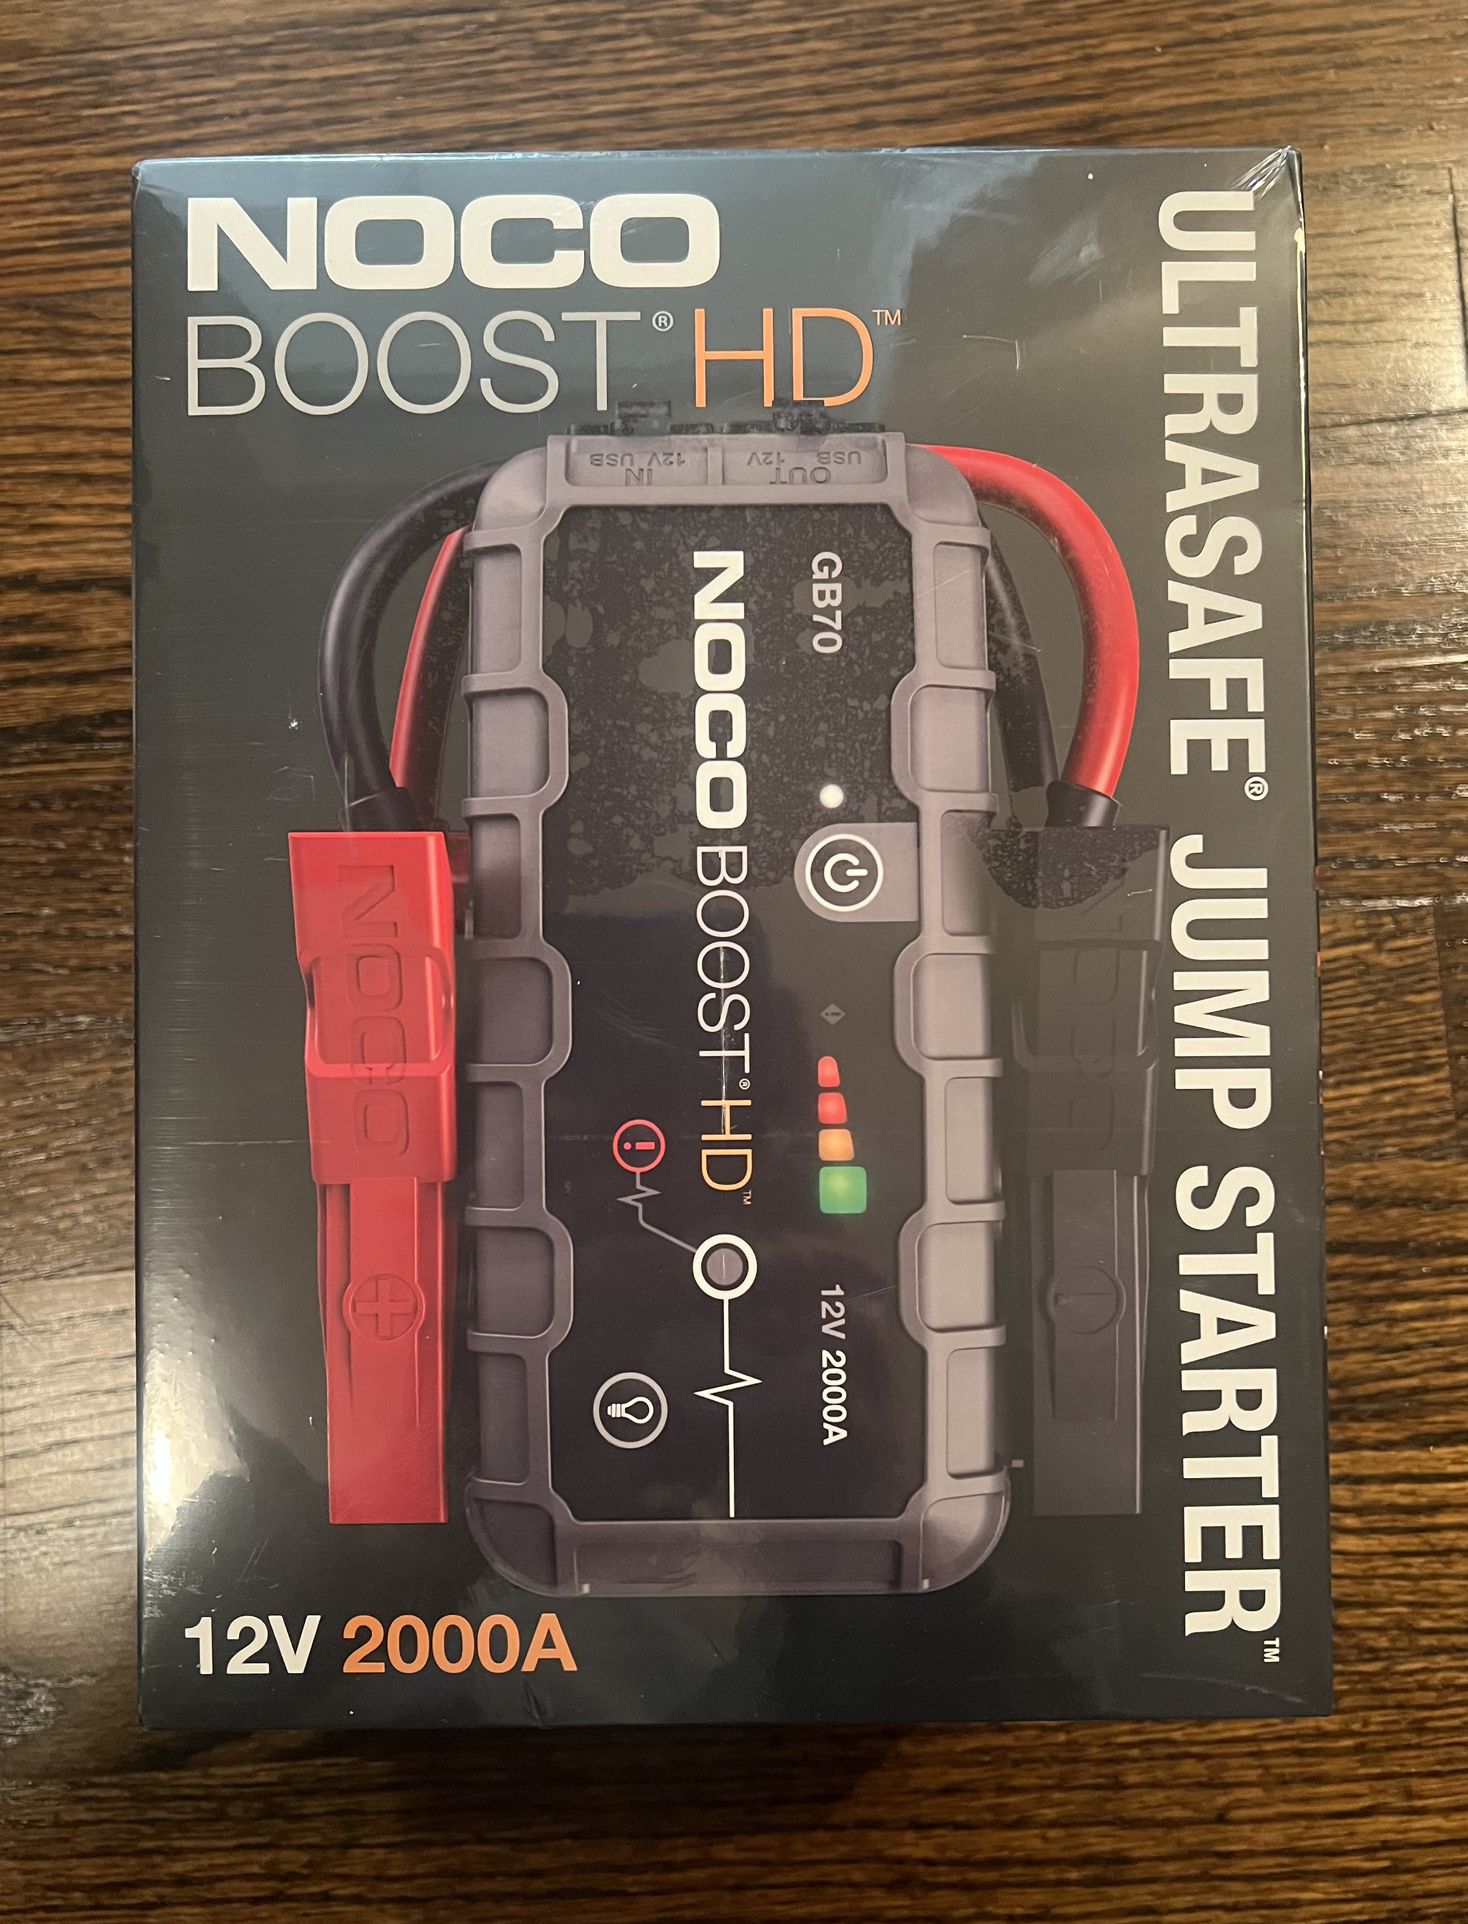 Noco Boost GB70 12v 2000amp Jump Stater for Sale in Denver, CO - OfferUp